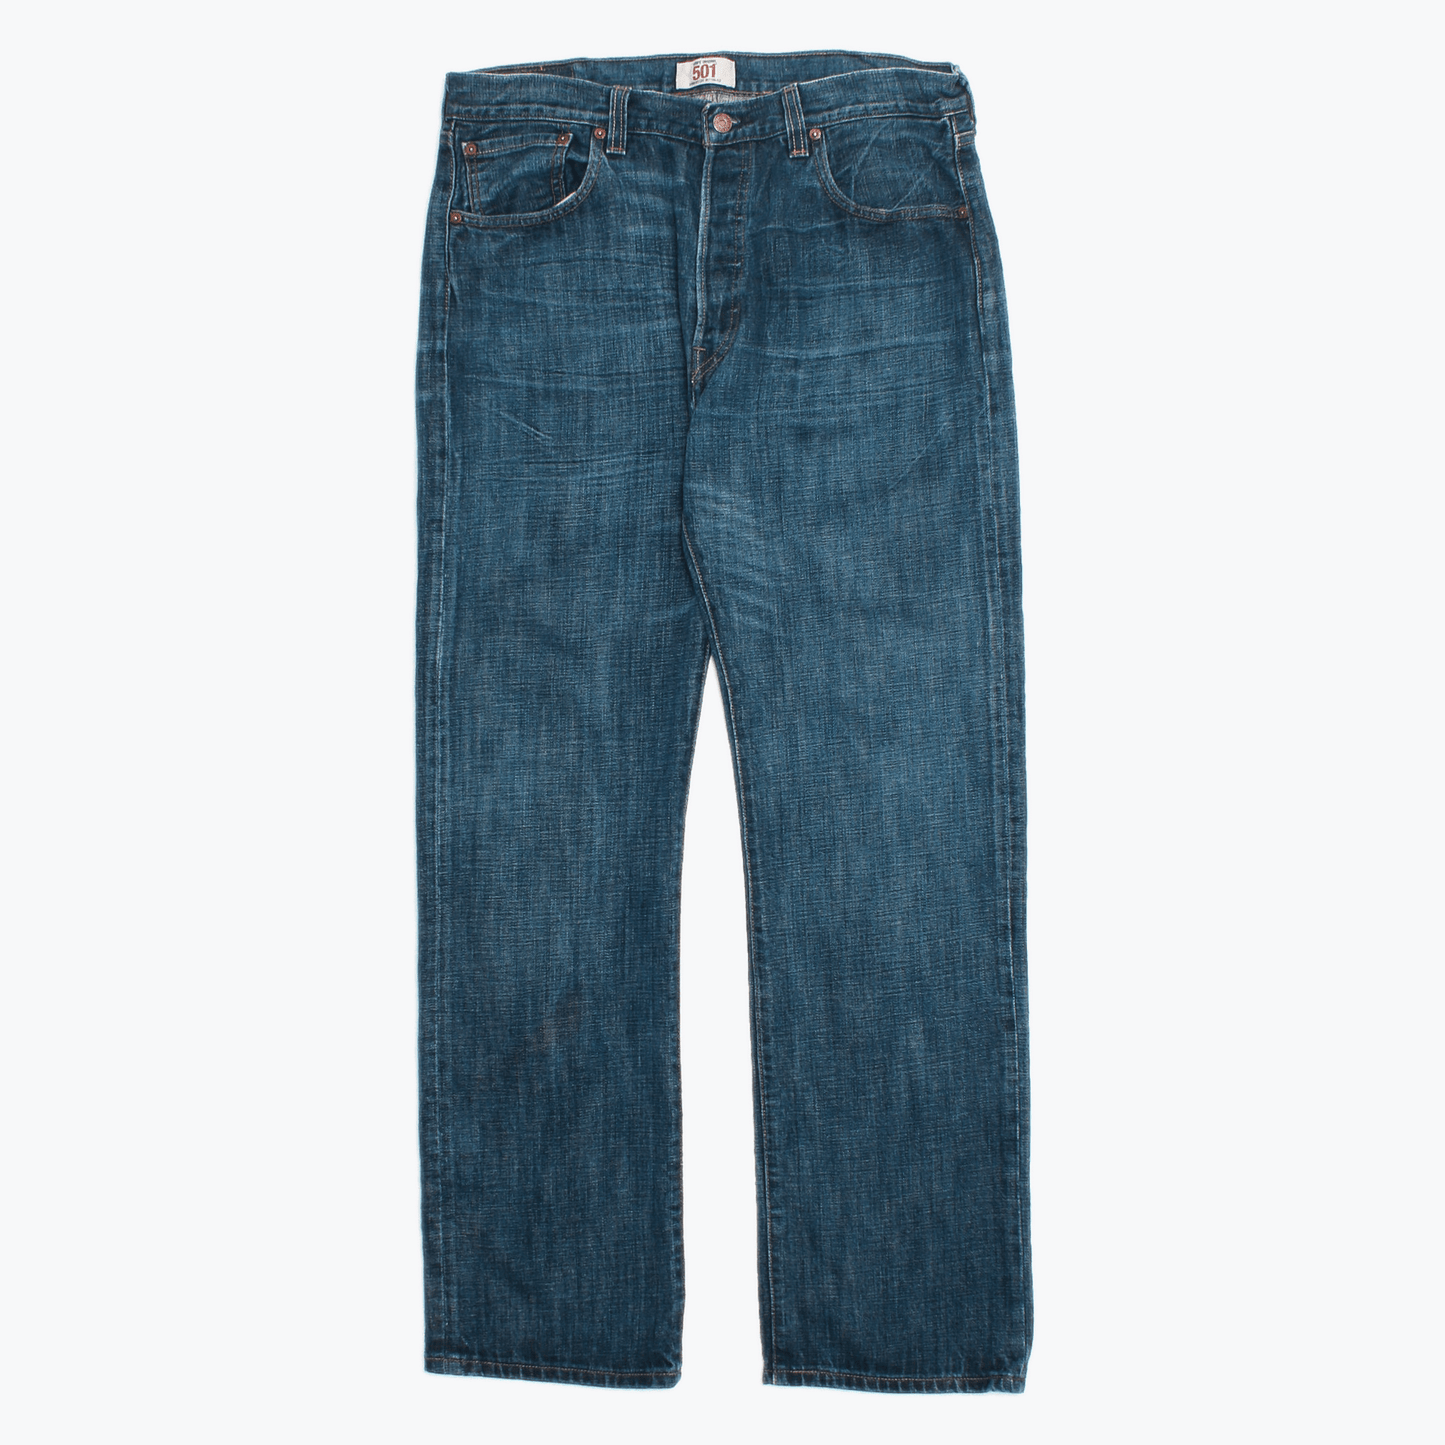 Vintage Levi's 501 Jeans - Denim Indigo Wash -36" 32" - American Madness